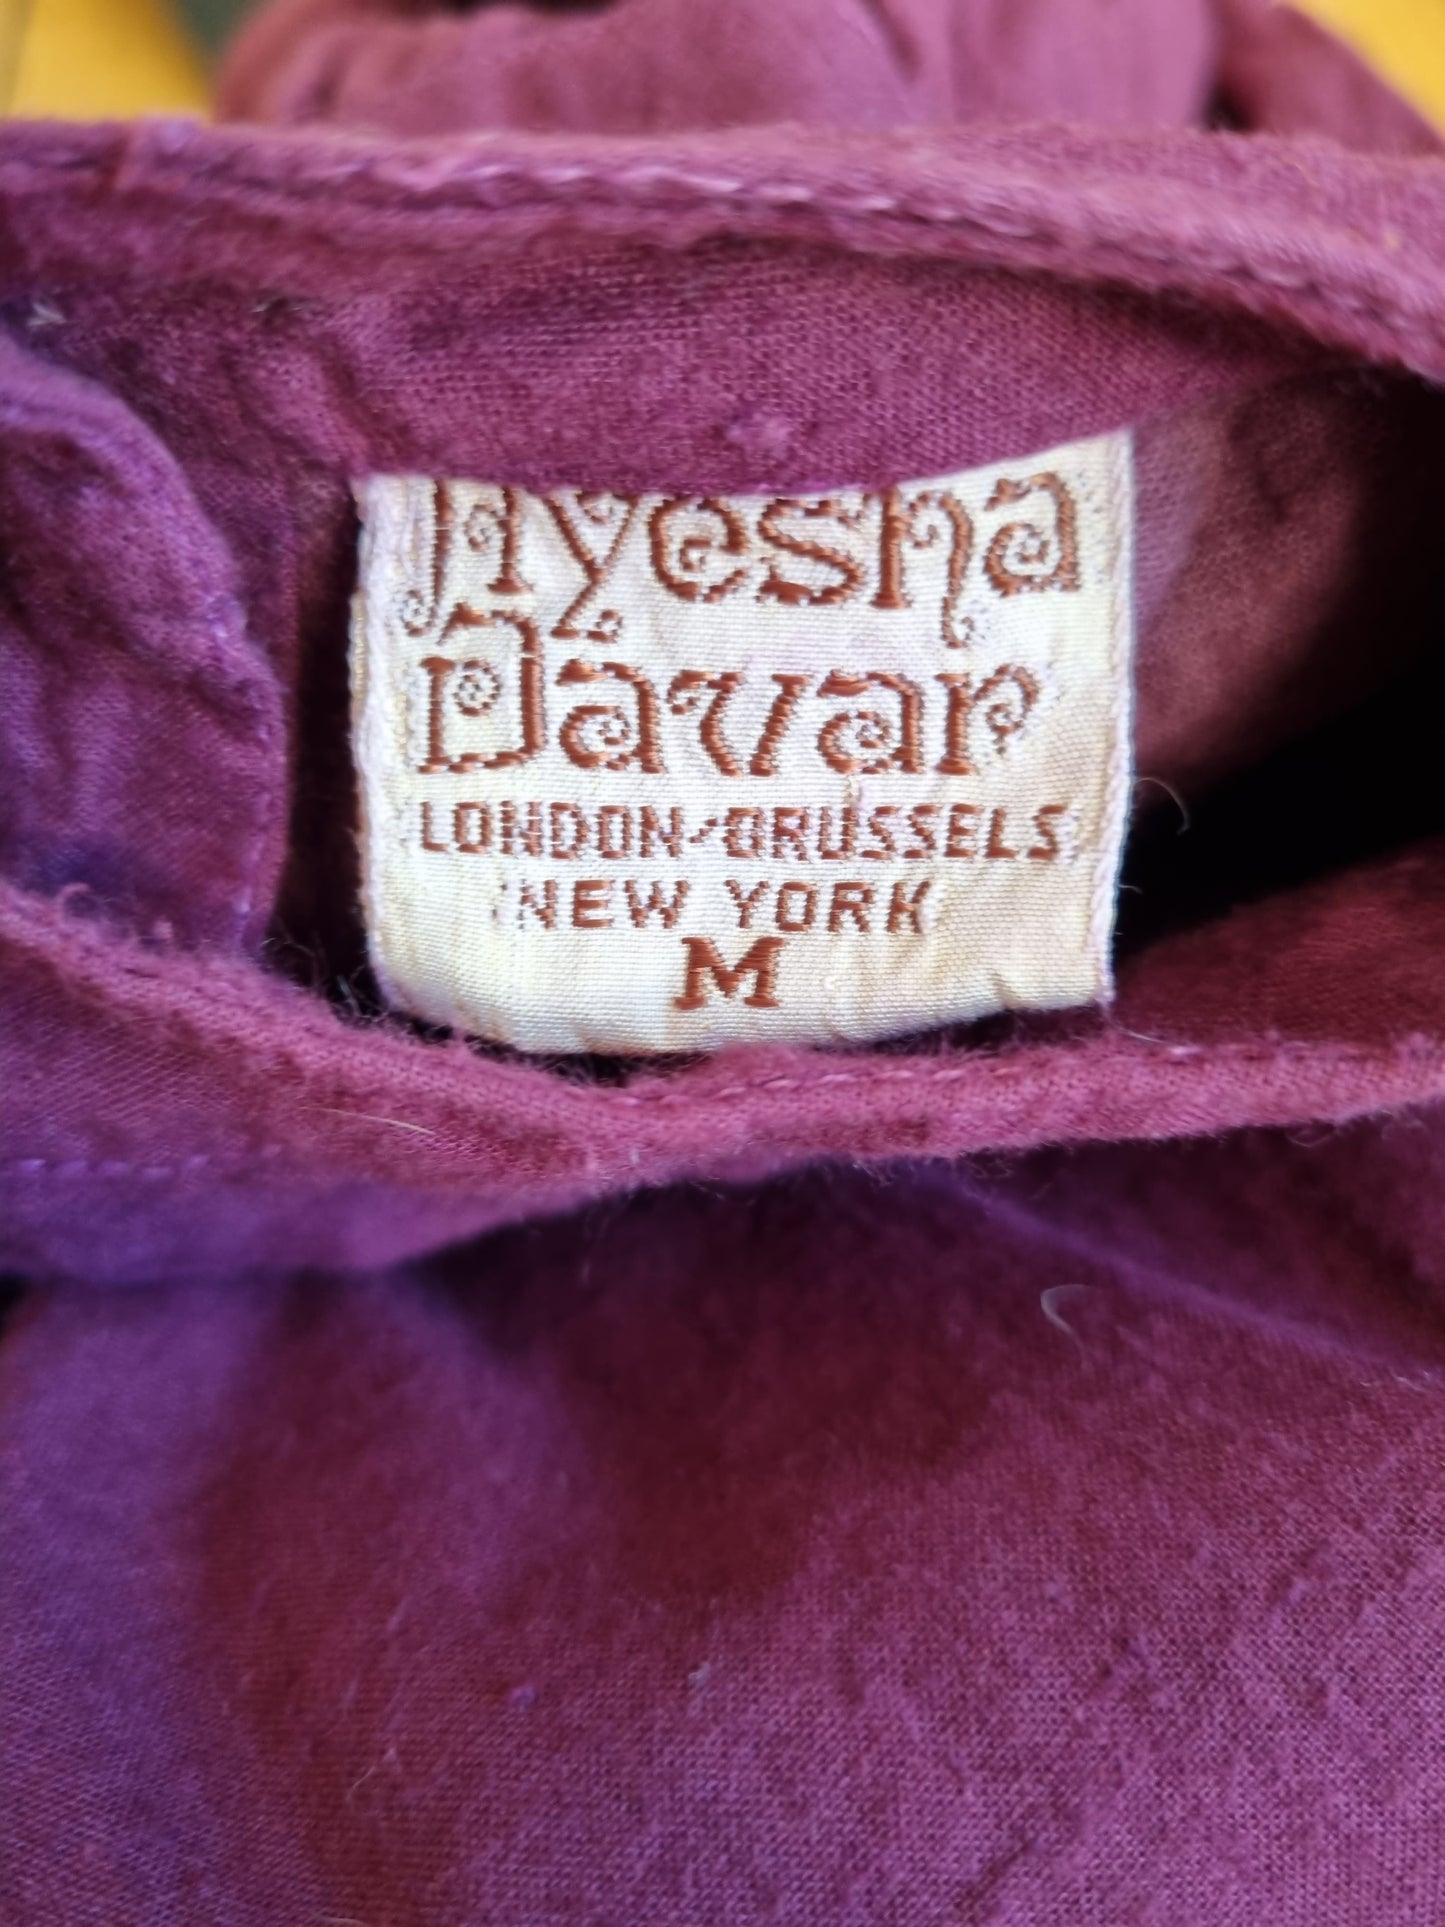 Vintage Ayesha Davar cotton dress